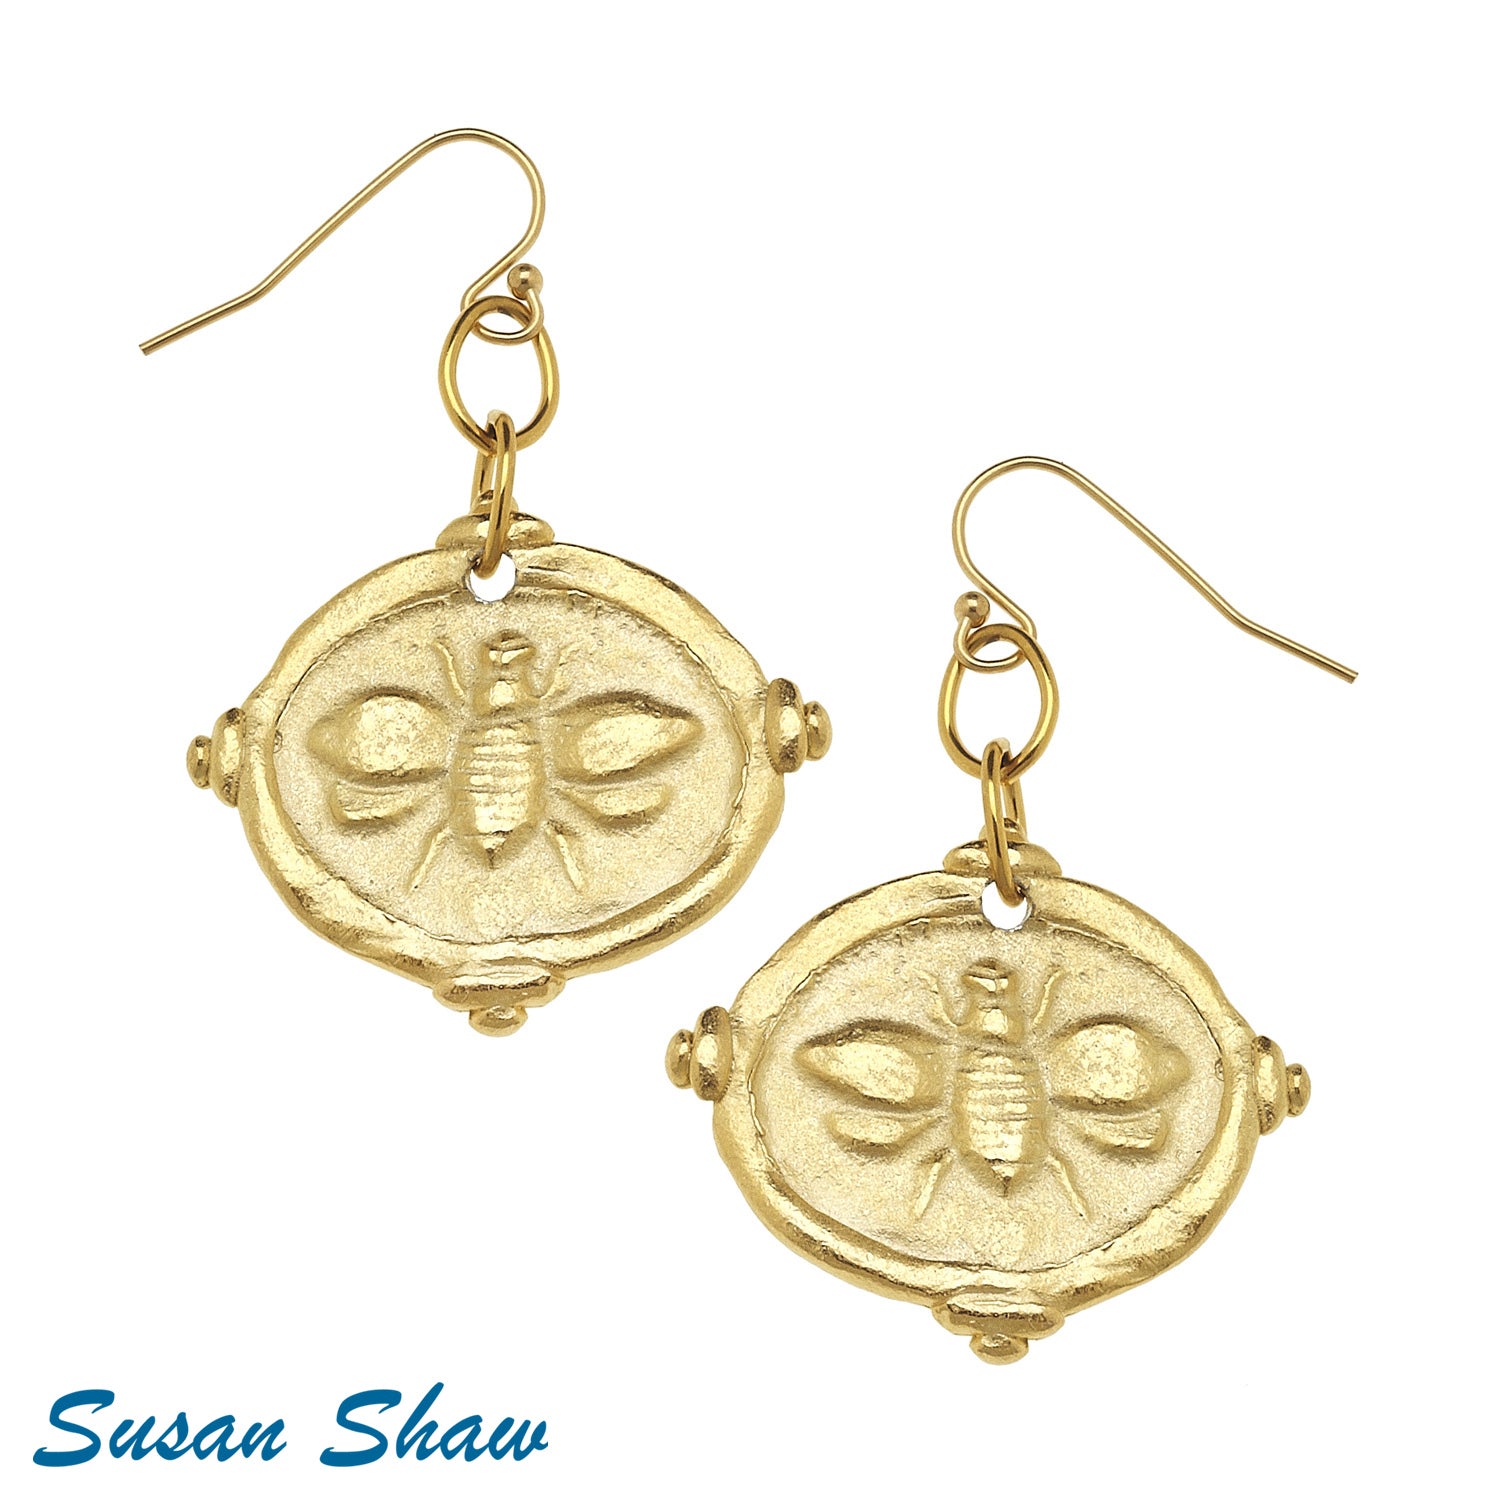 Susan Shaw Handcast Gold Bee Intaglio Earrings